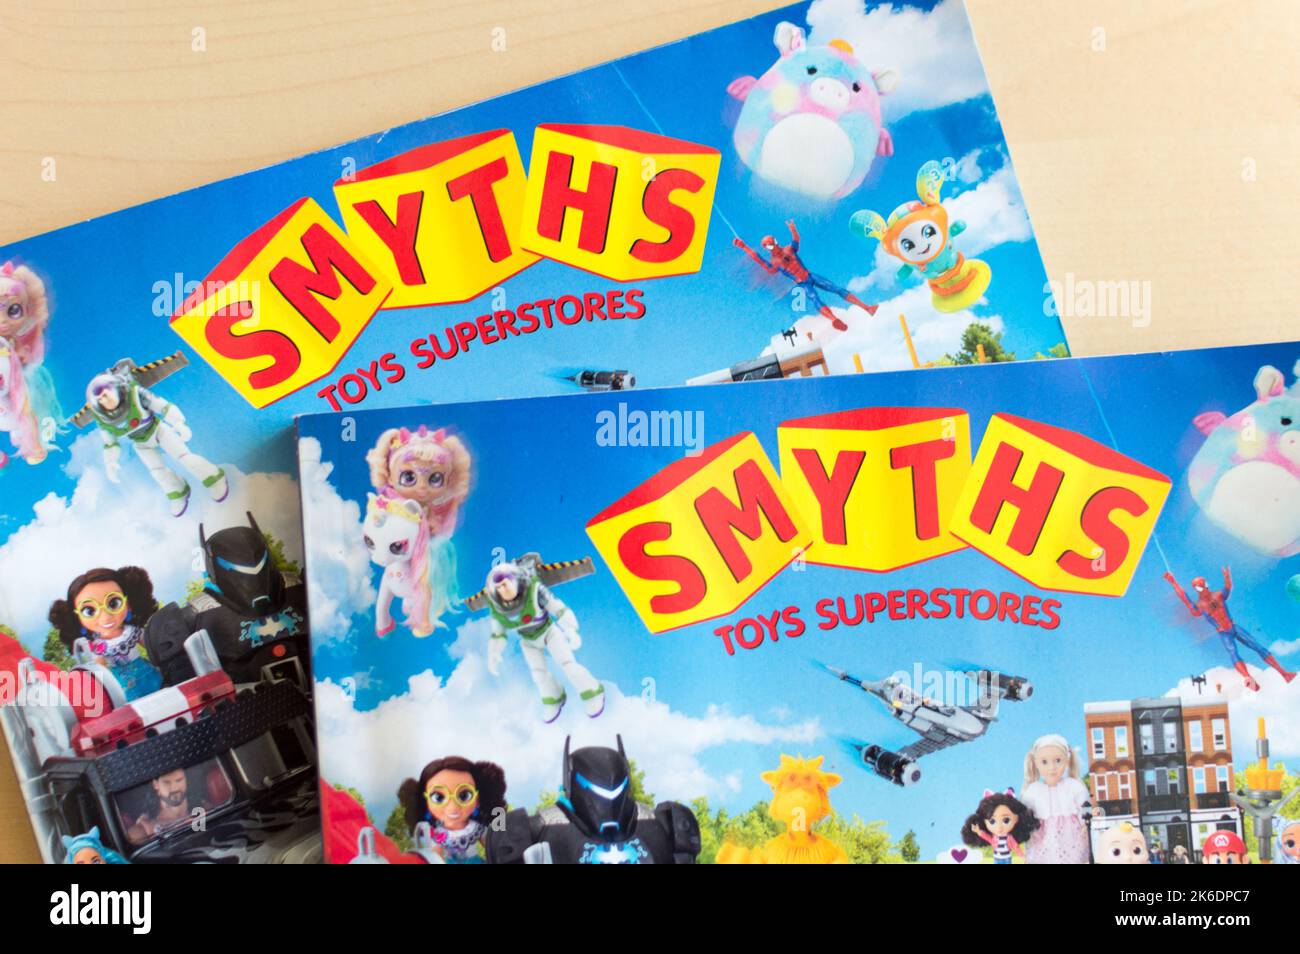 Smyths Spielzeug Supermarkt Katalog gedrucktes Buch Stockfoto